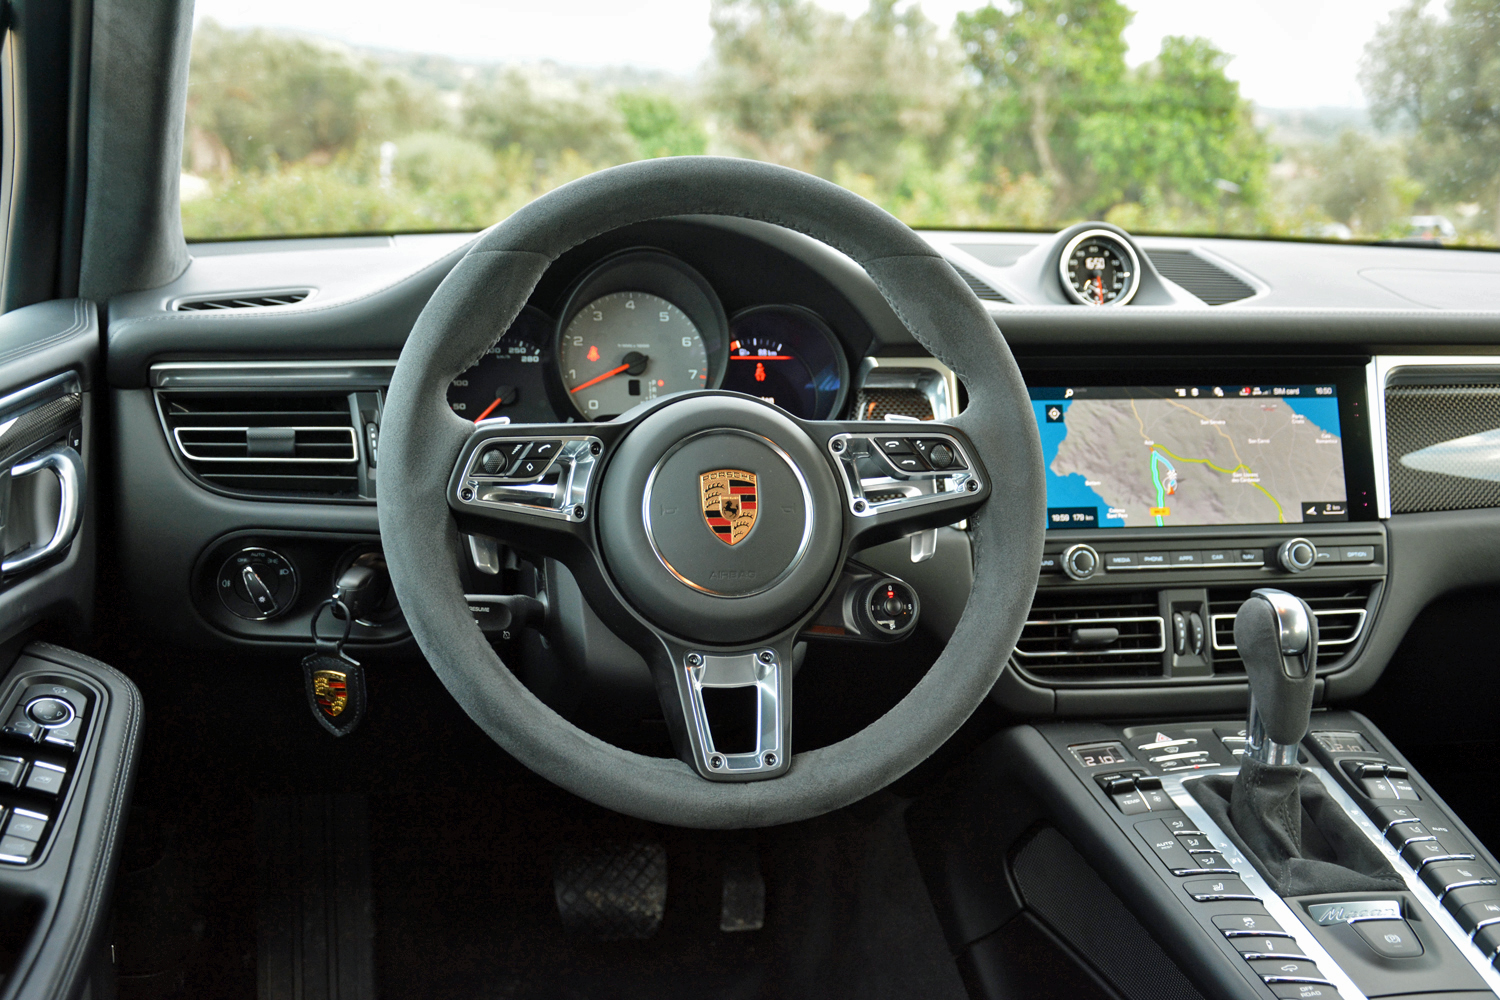 My Porsche App provides new features within Apple CarPlay® - Porsche  Newsroom